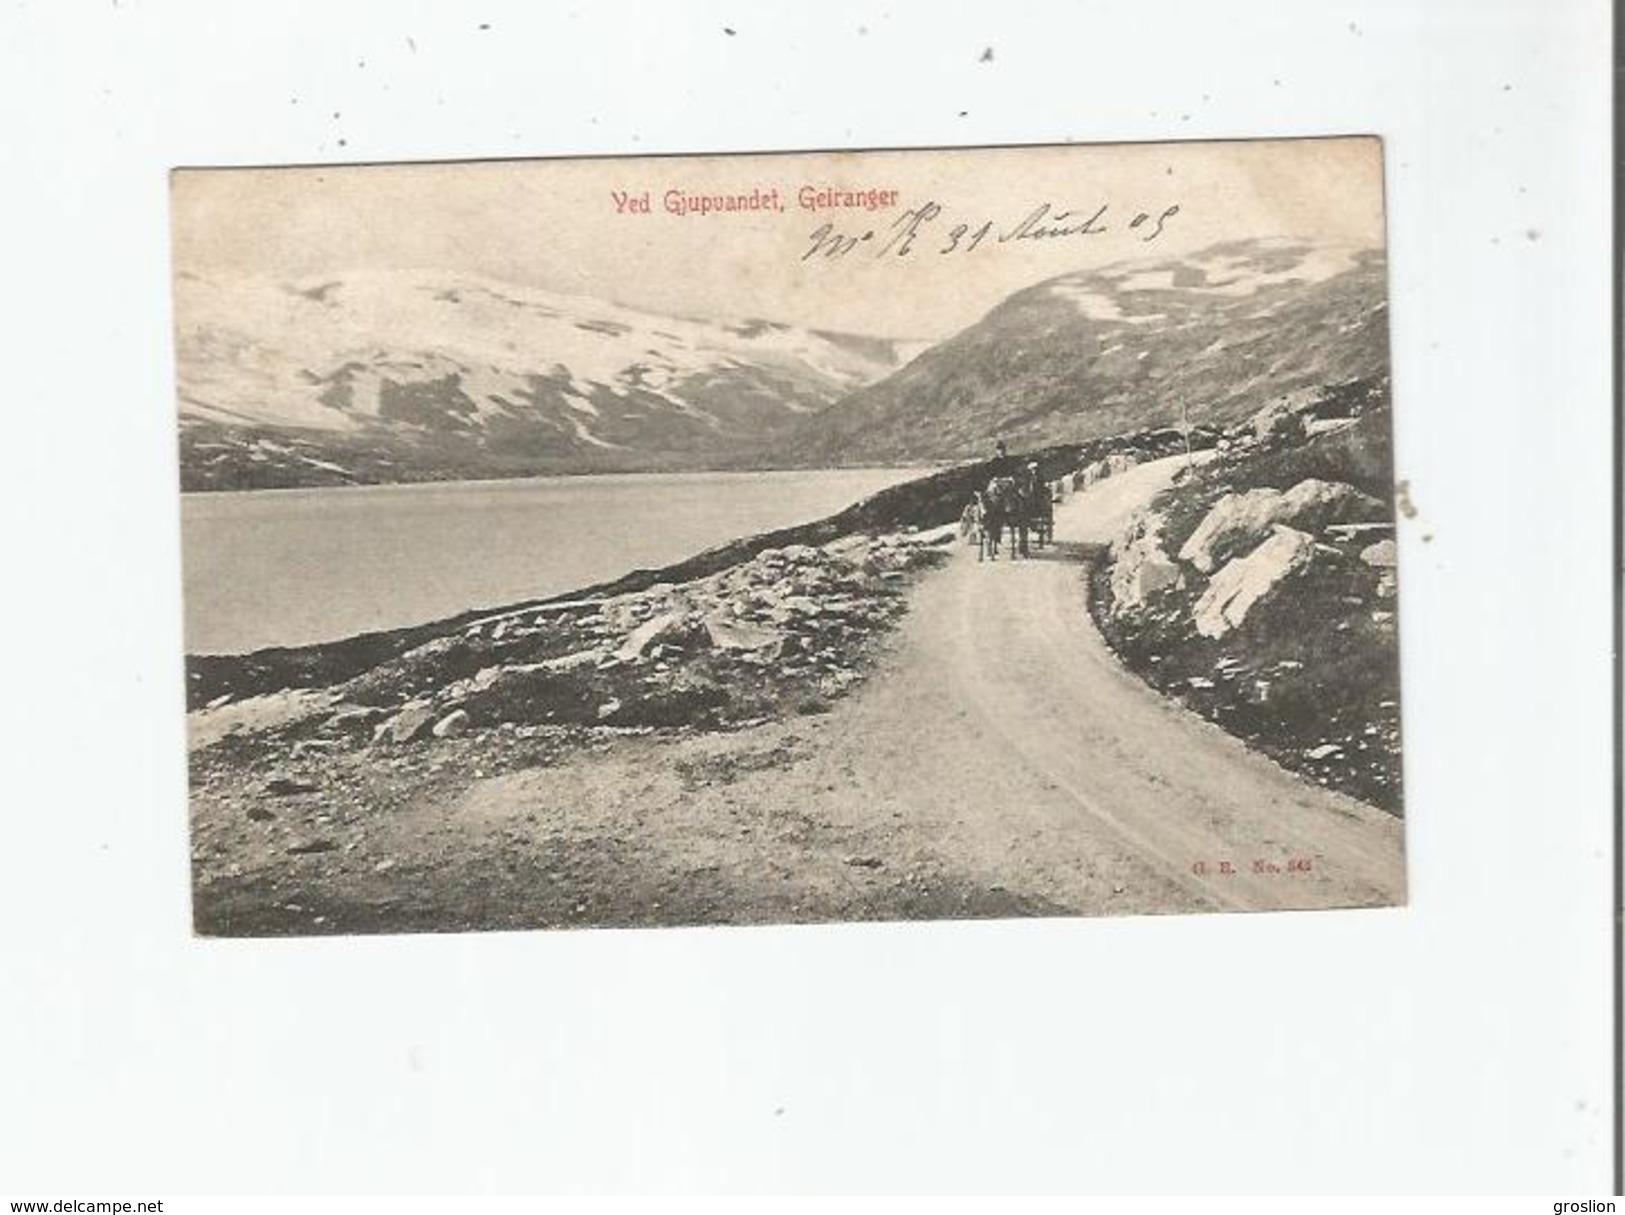 GEIRANGER 847  VED GJUPUANDET 1905 - Norwegen